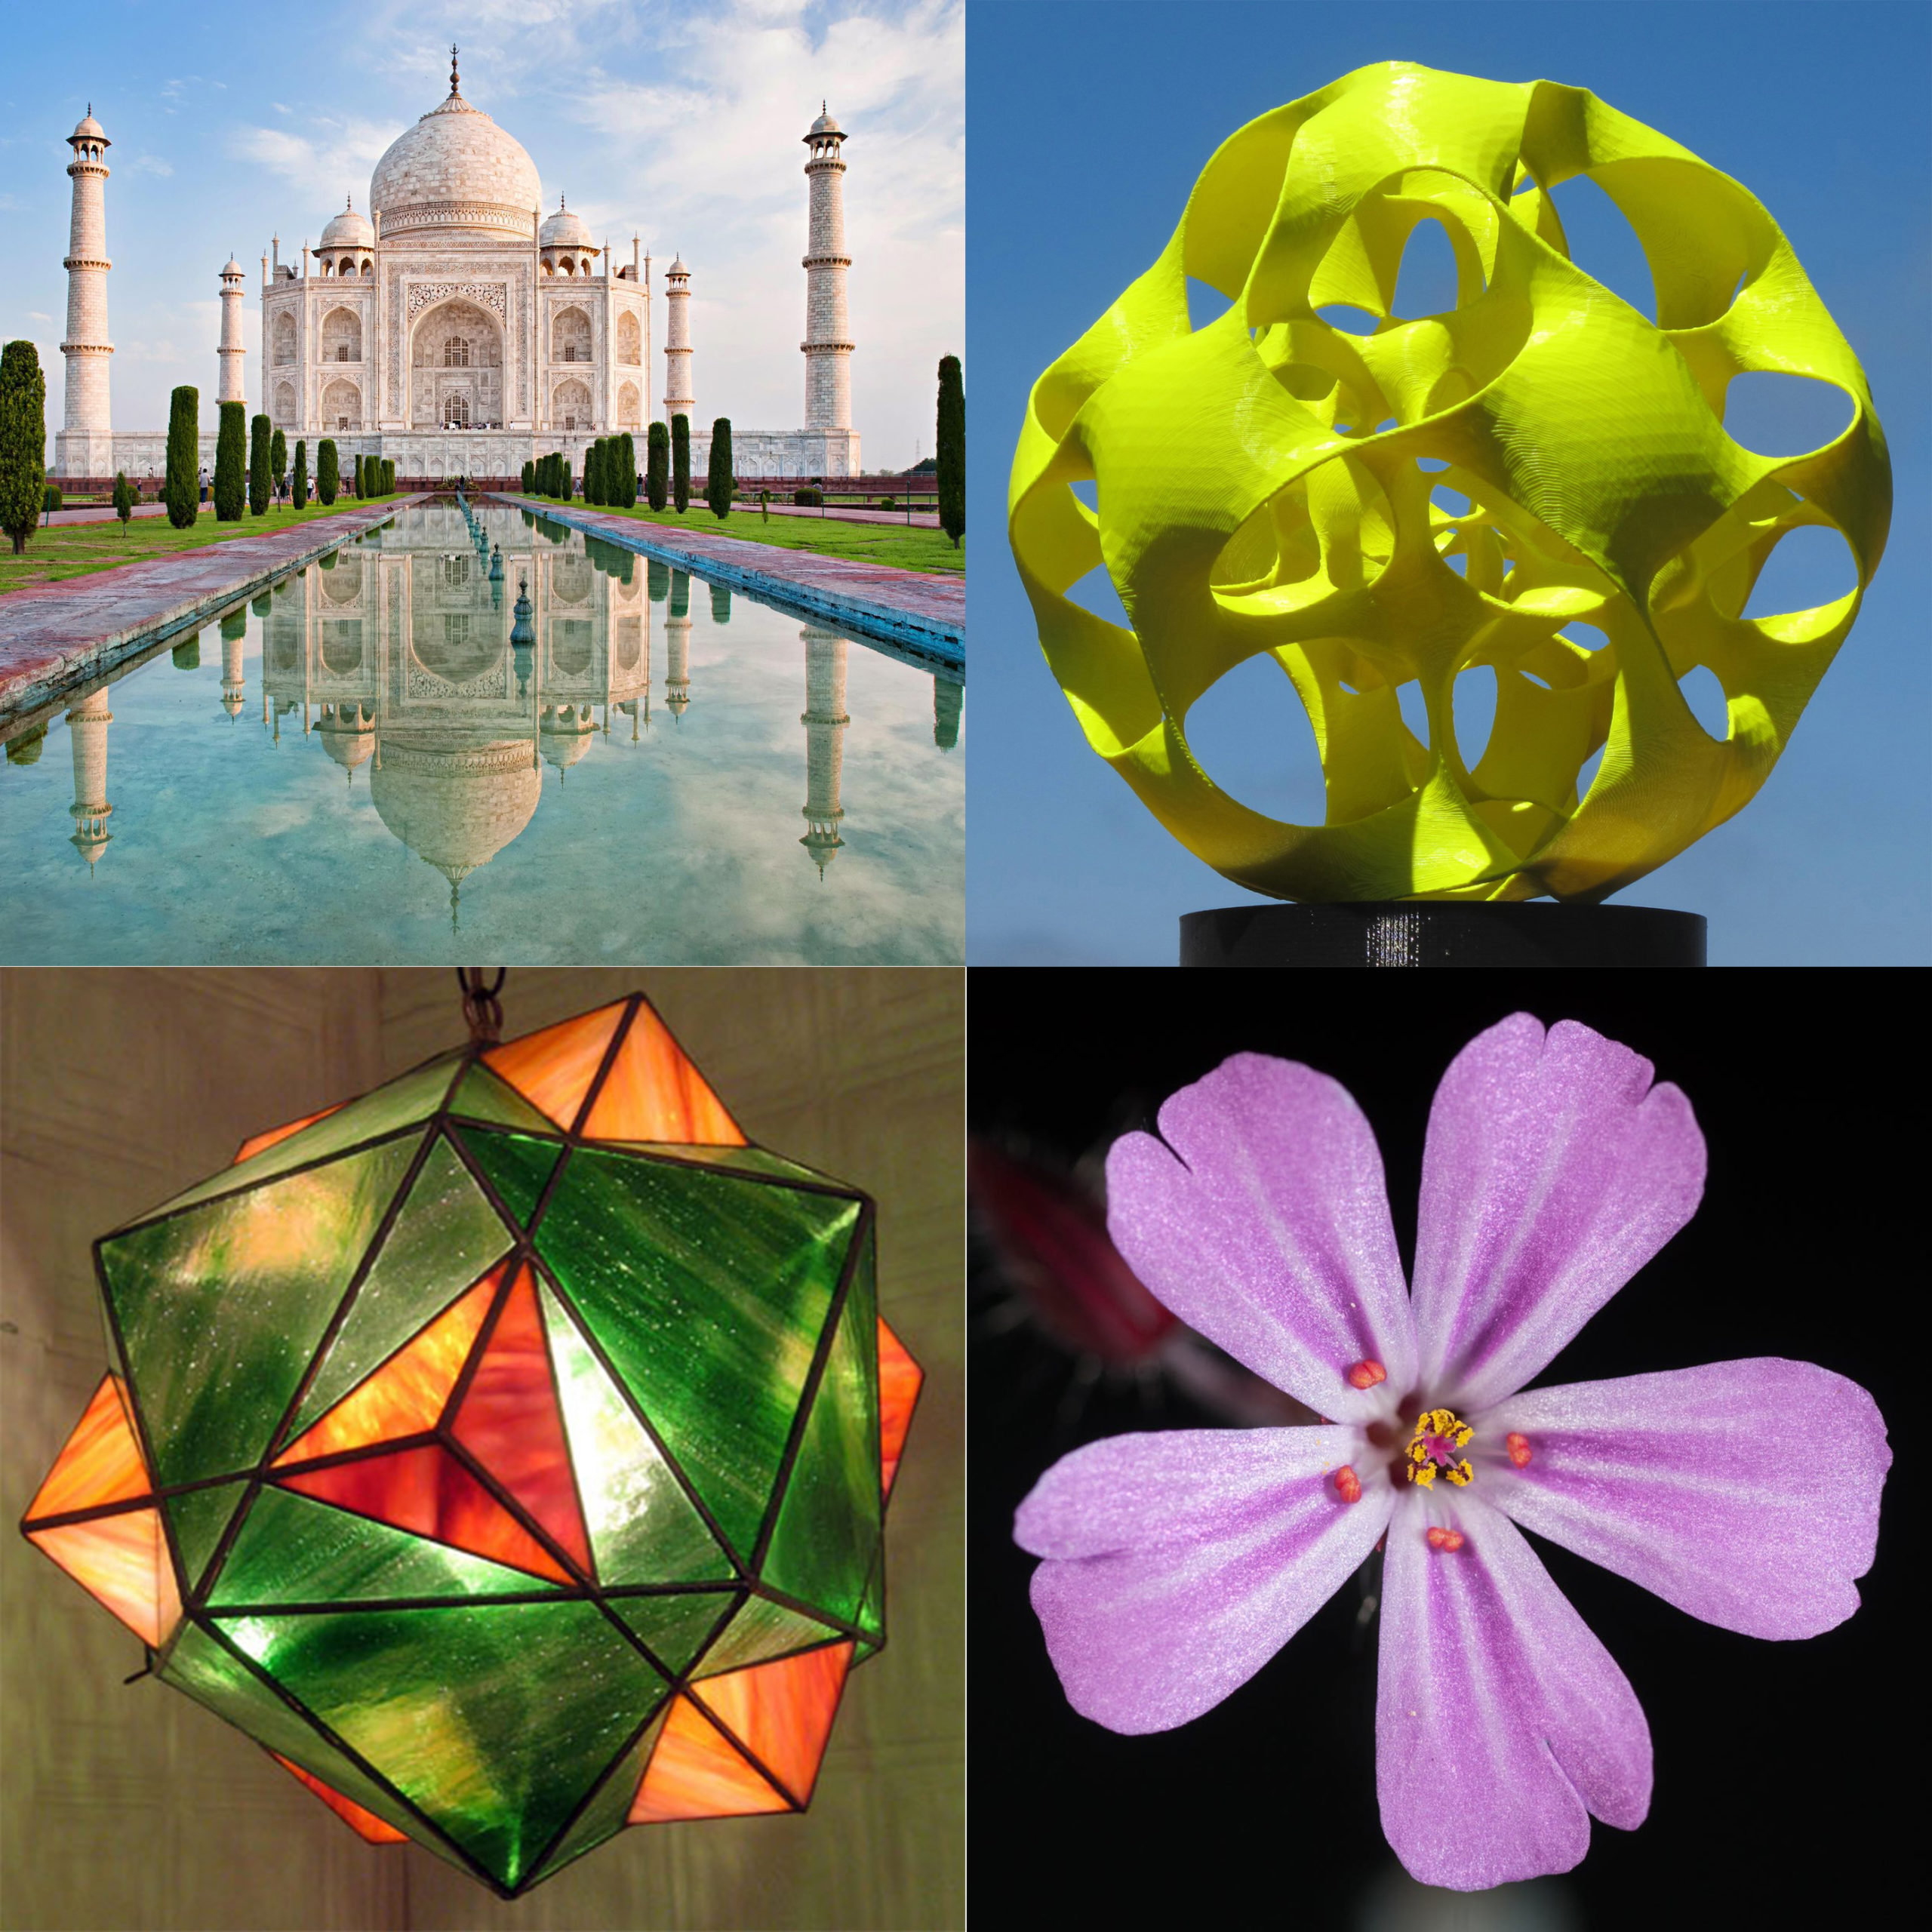 Art, science & mathematics of symmetry